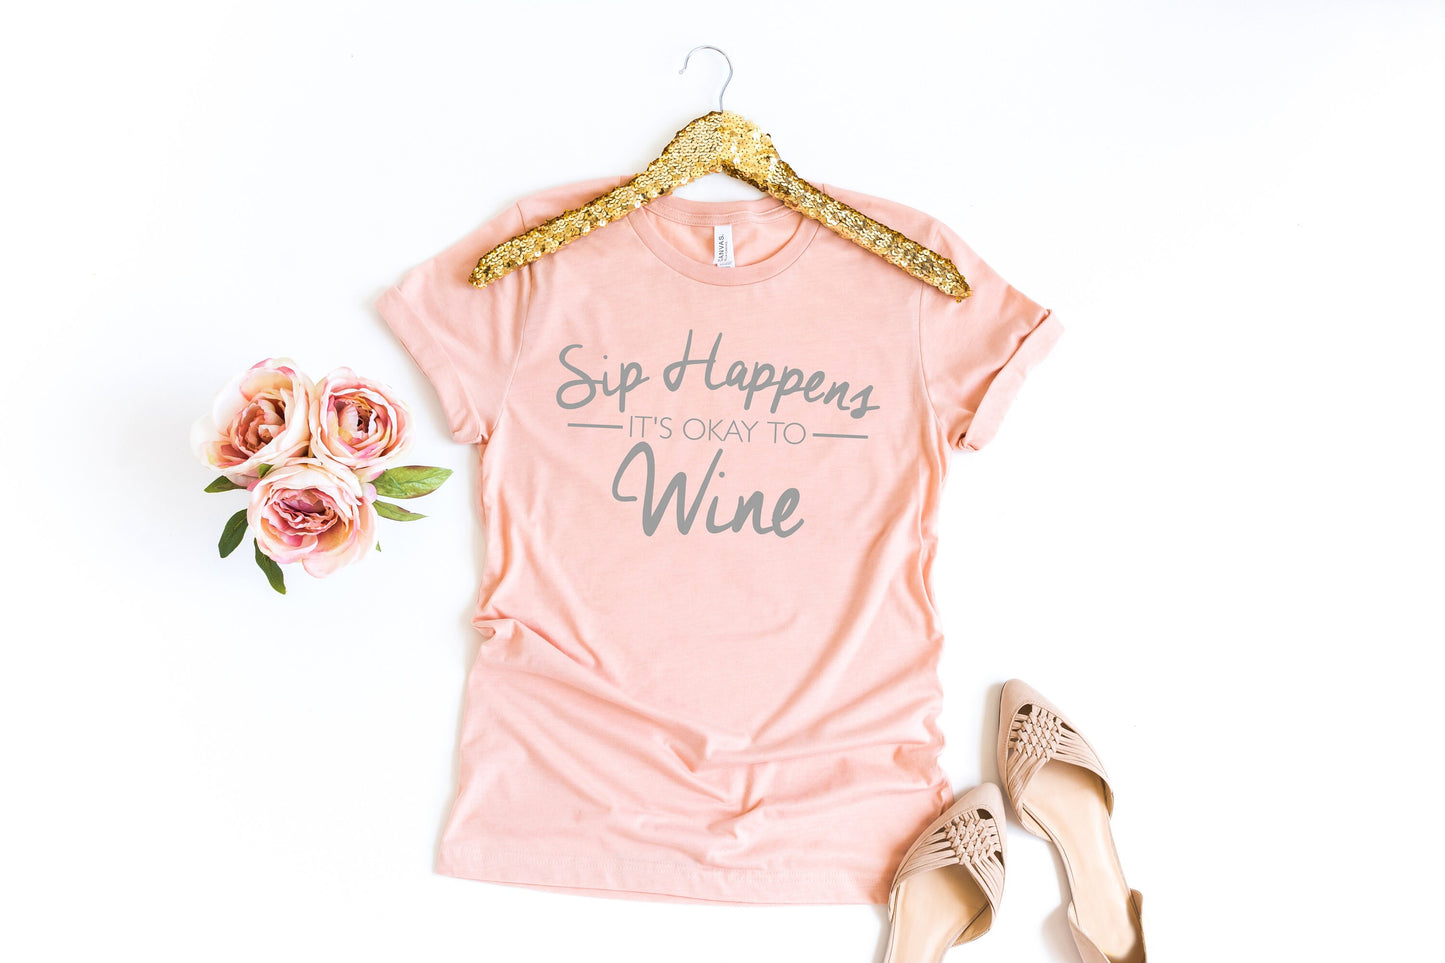 Sip Happens It's Okay to Wine Unisex Adult t-shirt - Funny Wine Shirt - Wine Lover Shirt - Wine Shirts - Gift for Wine Lover - Love Wine Tee